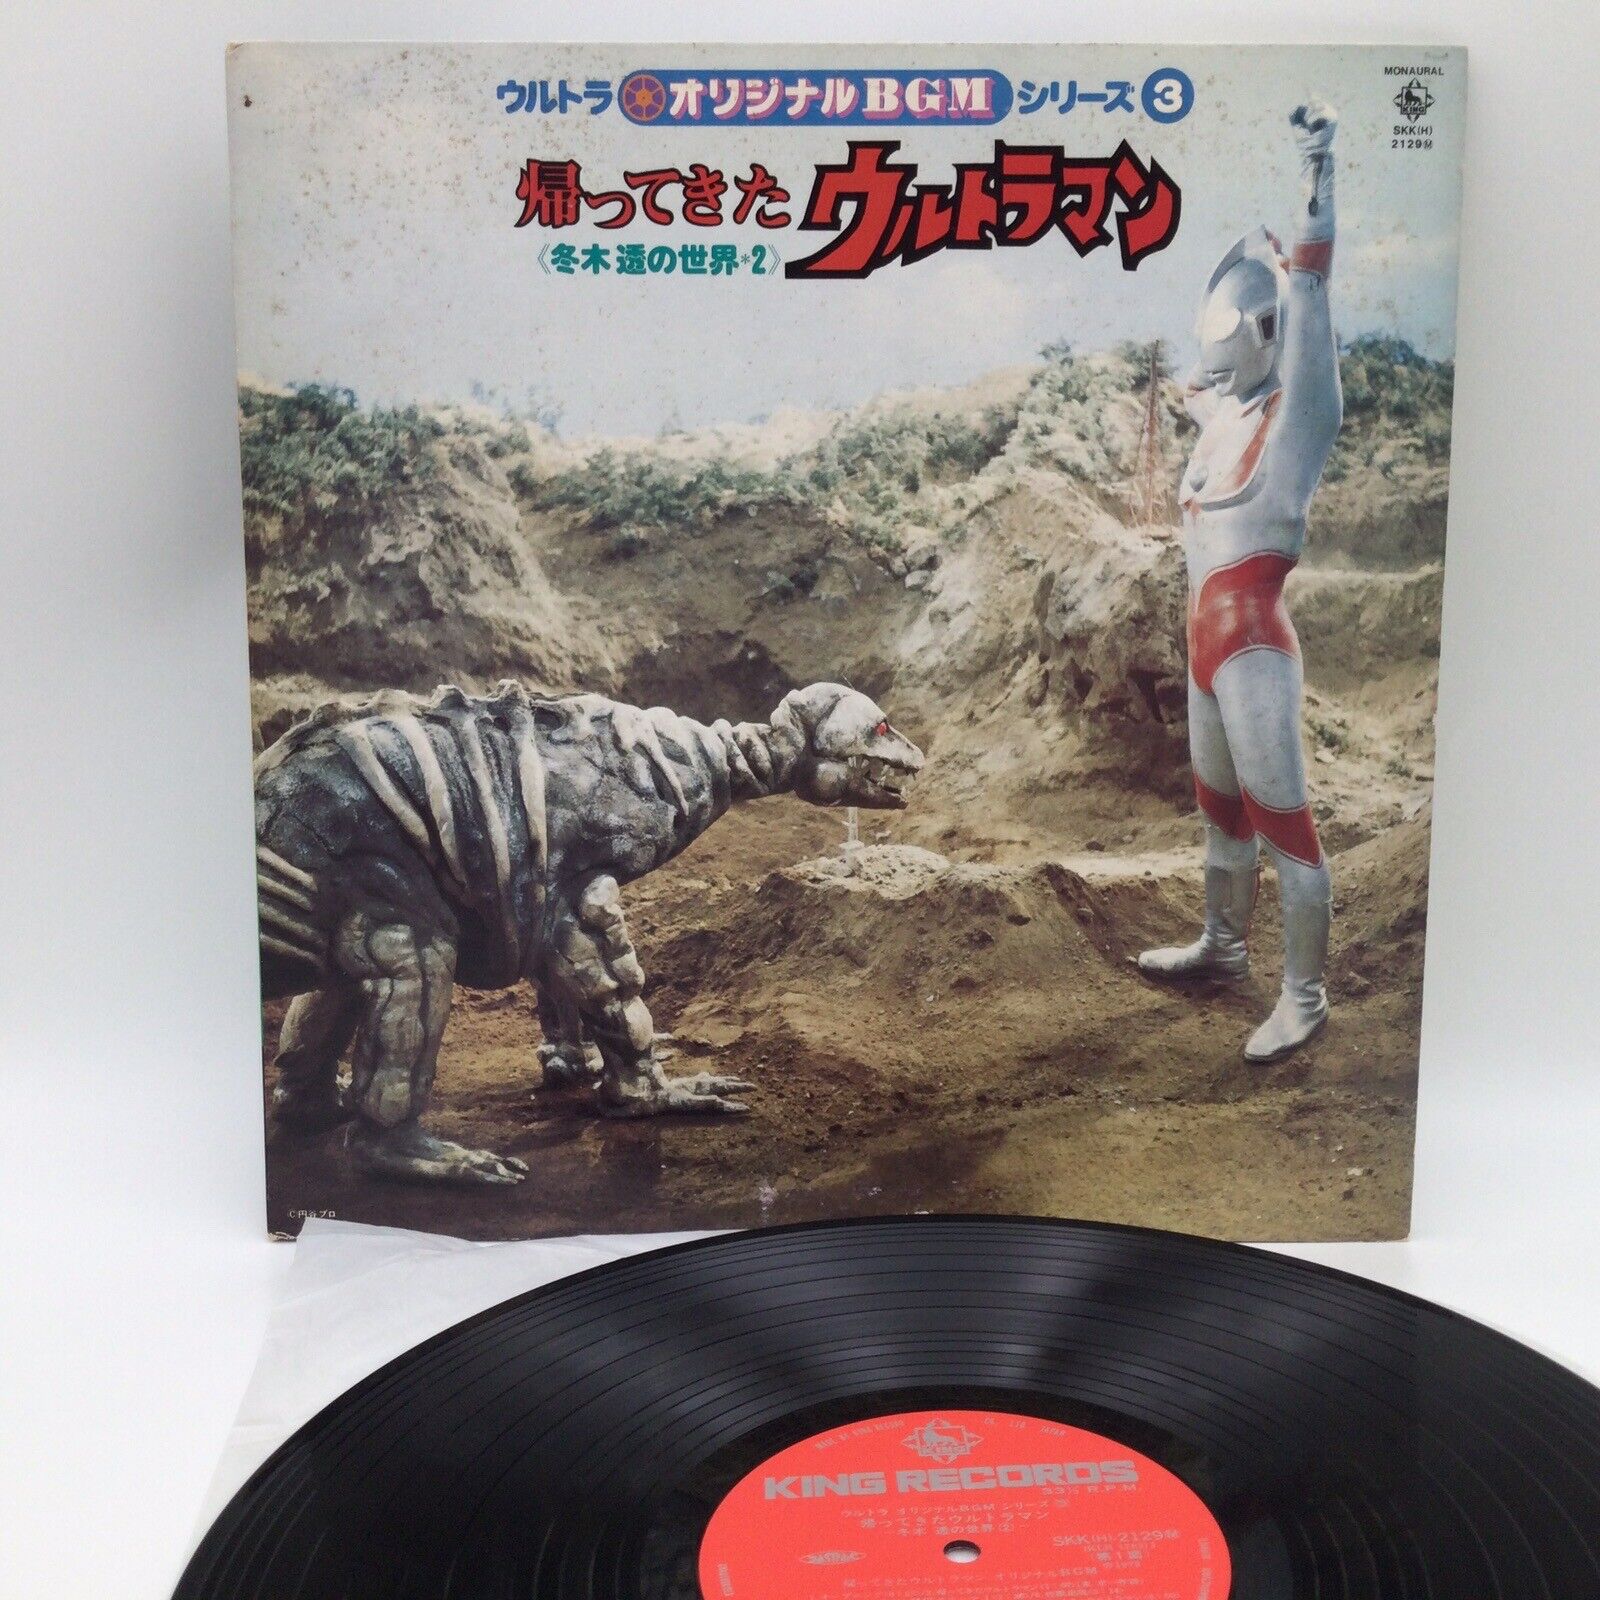 Ultraman is back Original BGM Series 3 Toru Fuyuki soundtrack Vinyl Record 1979